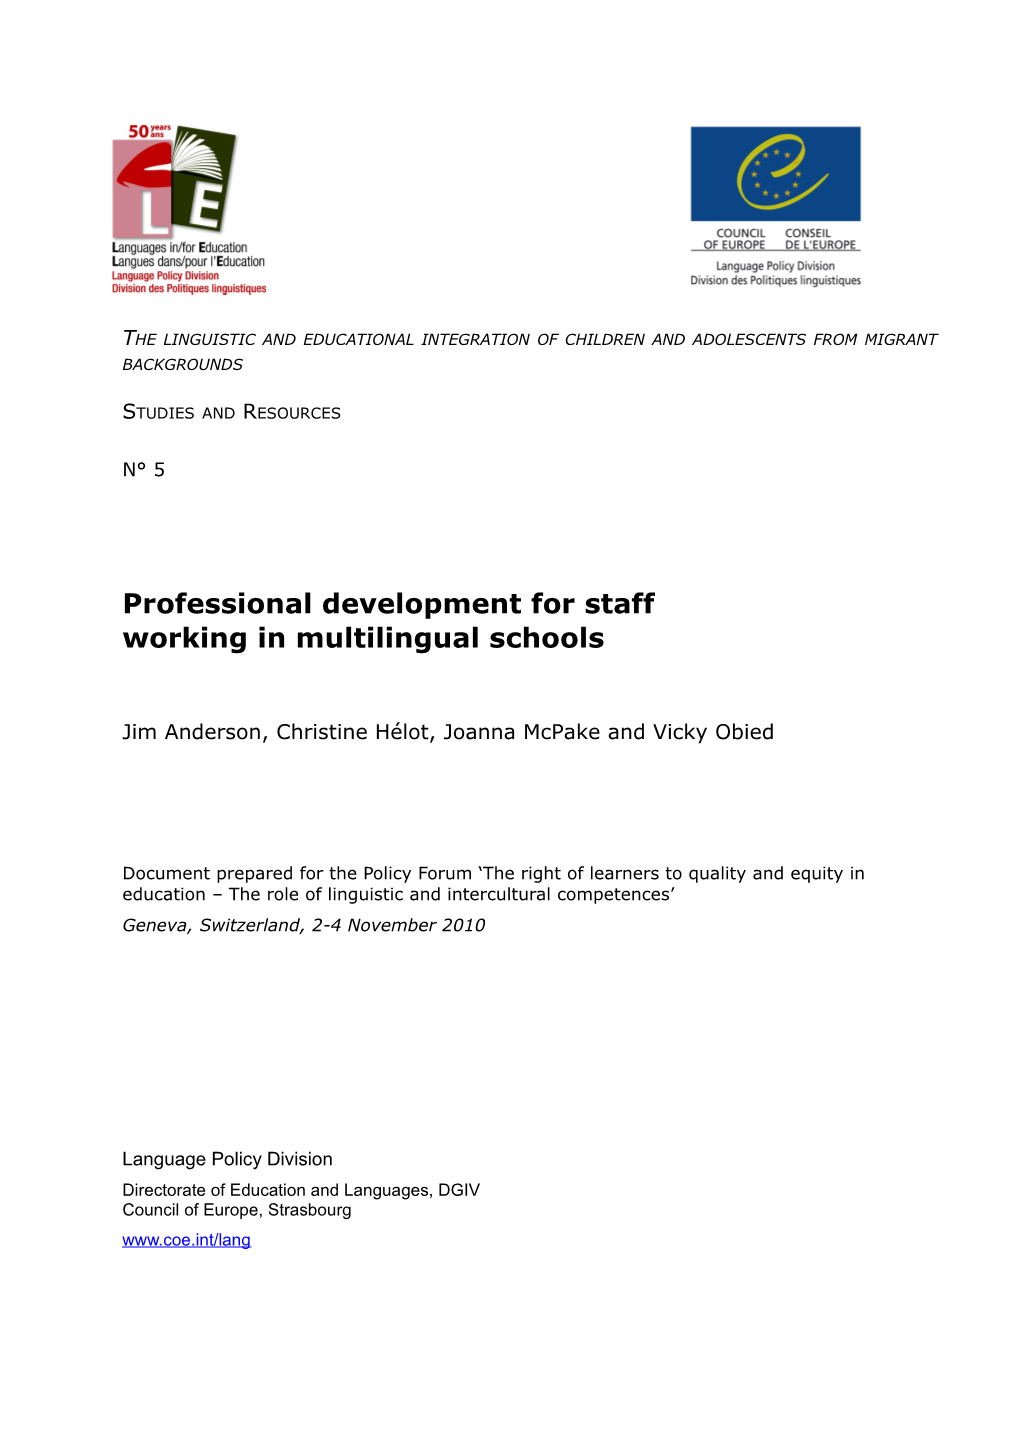 Professional Development for Staff Working in Multilingual Schools